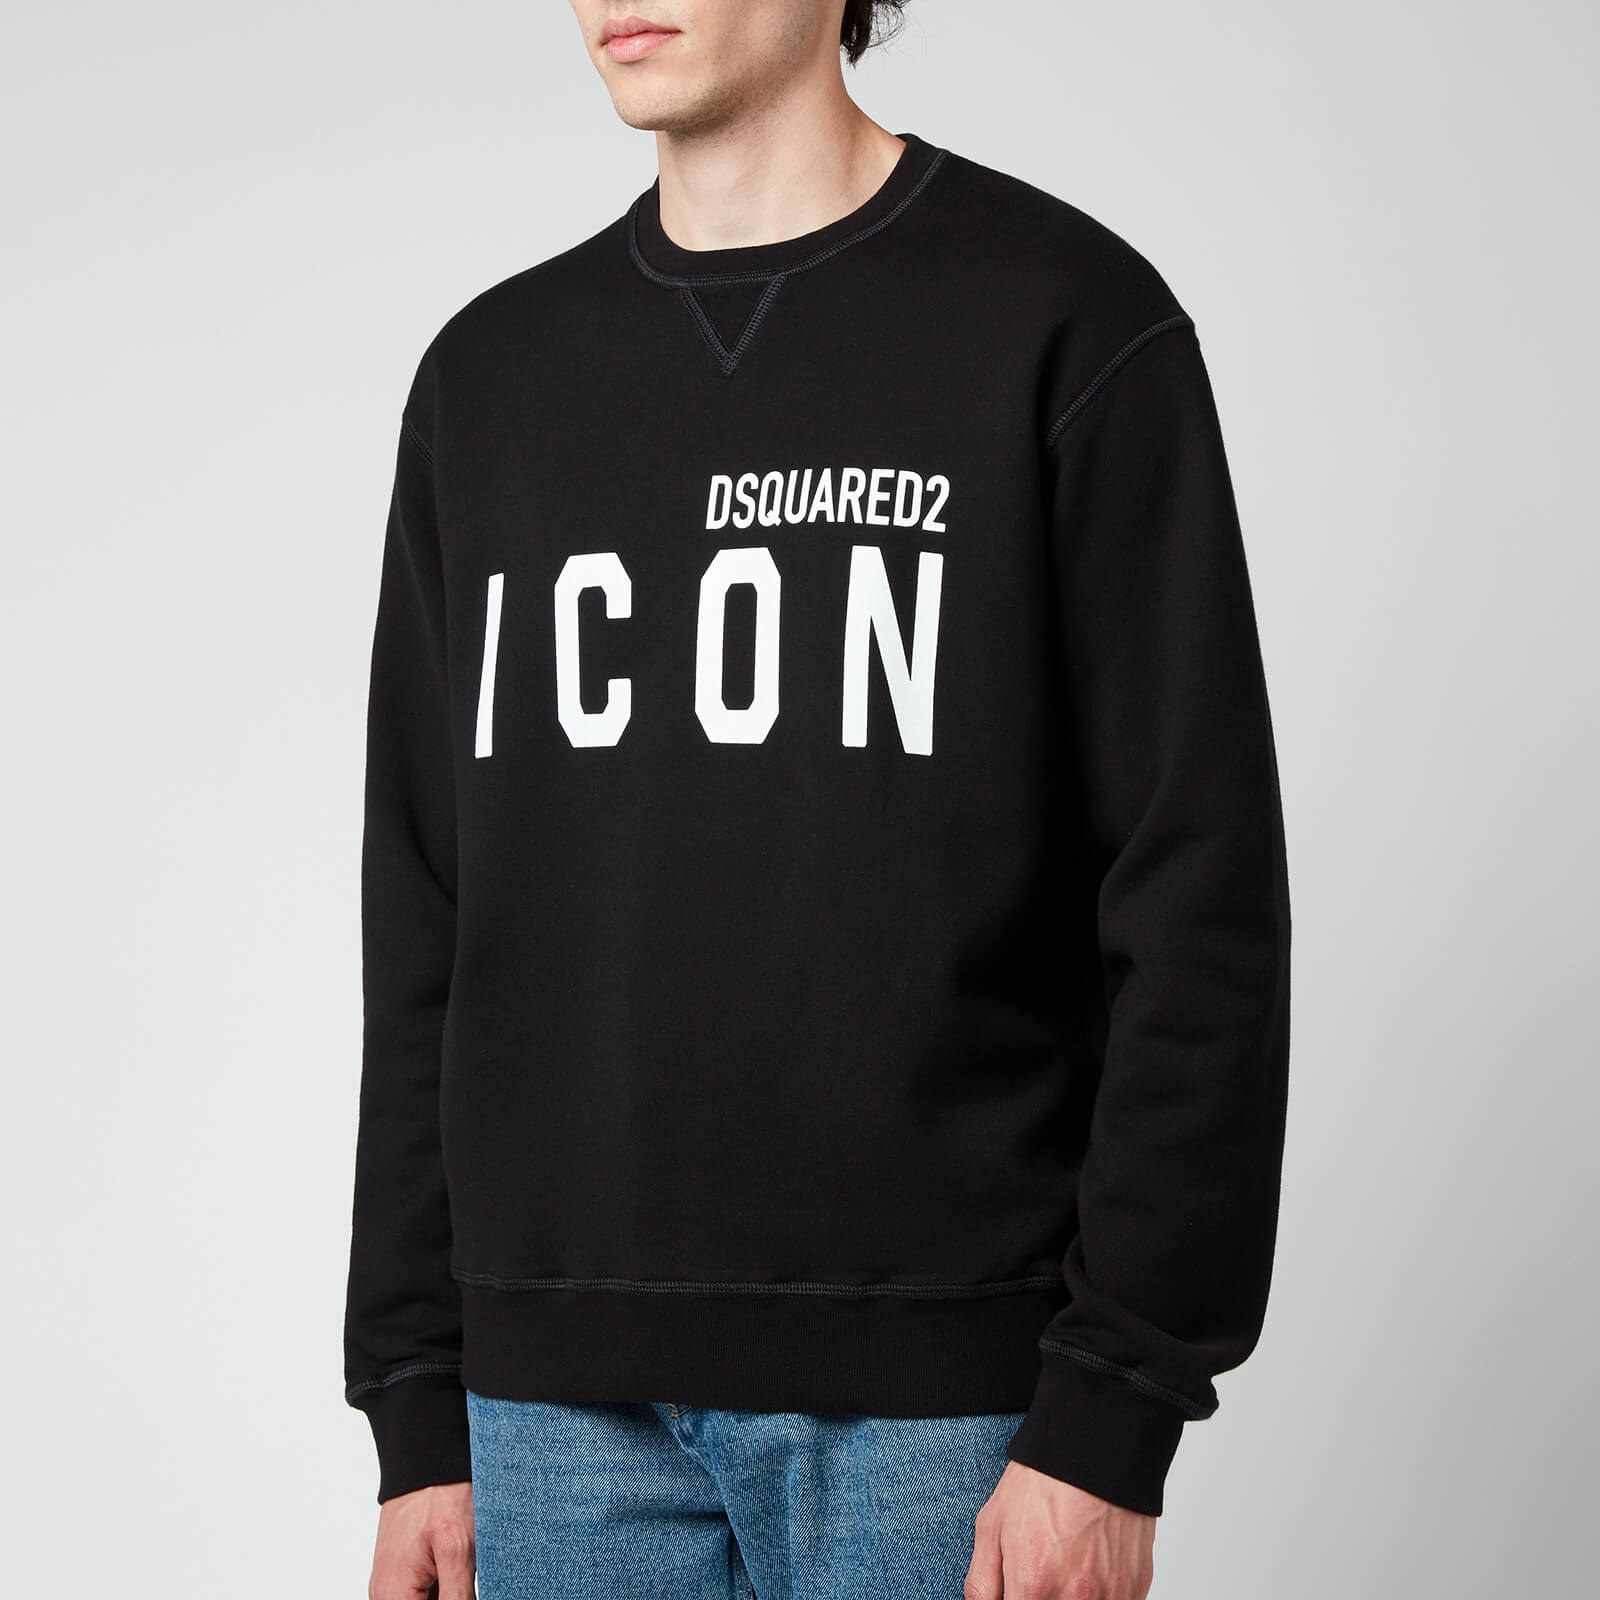 Dsquared2 Men's Icon Sweatshirt - Black - S